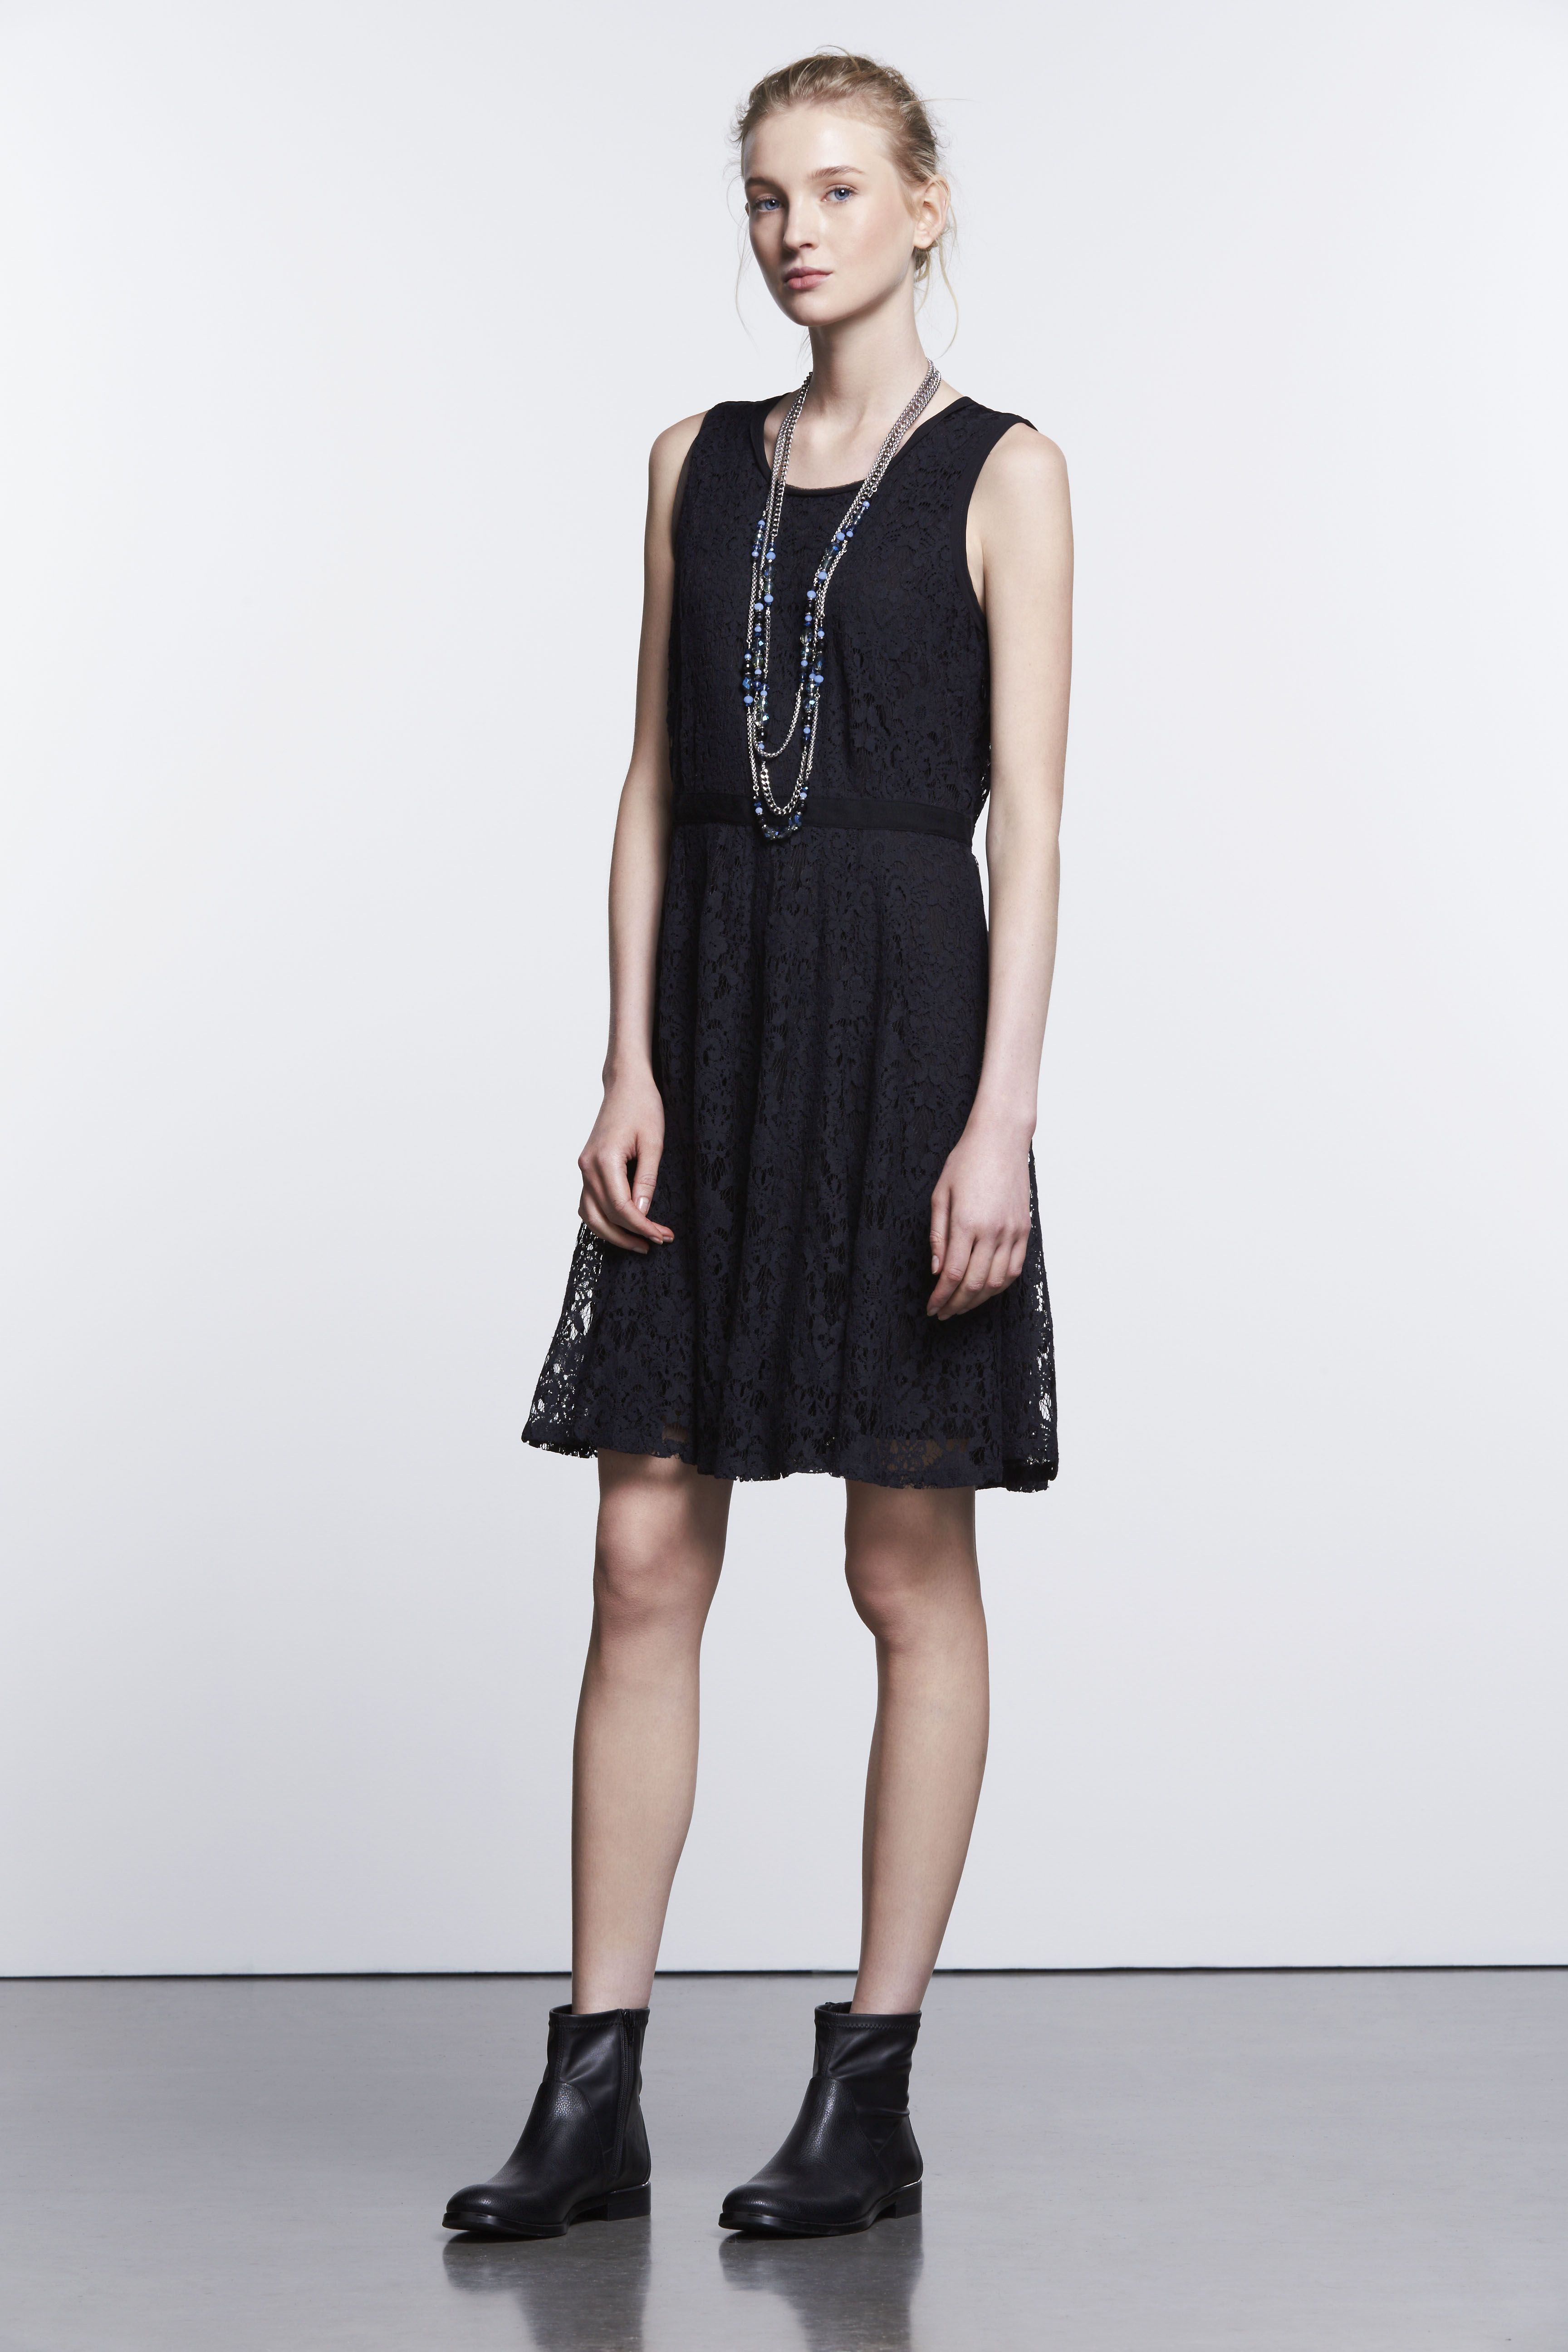 Simply Vera Dress by Vera Wang BlackDress Size 4 - Gem